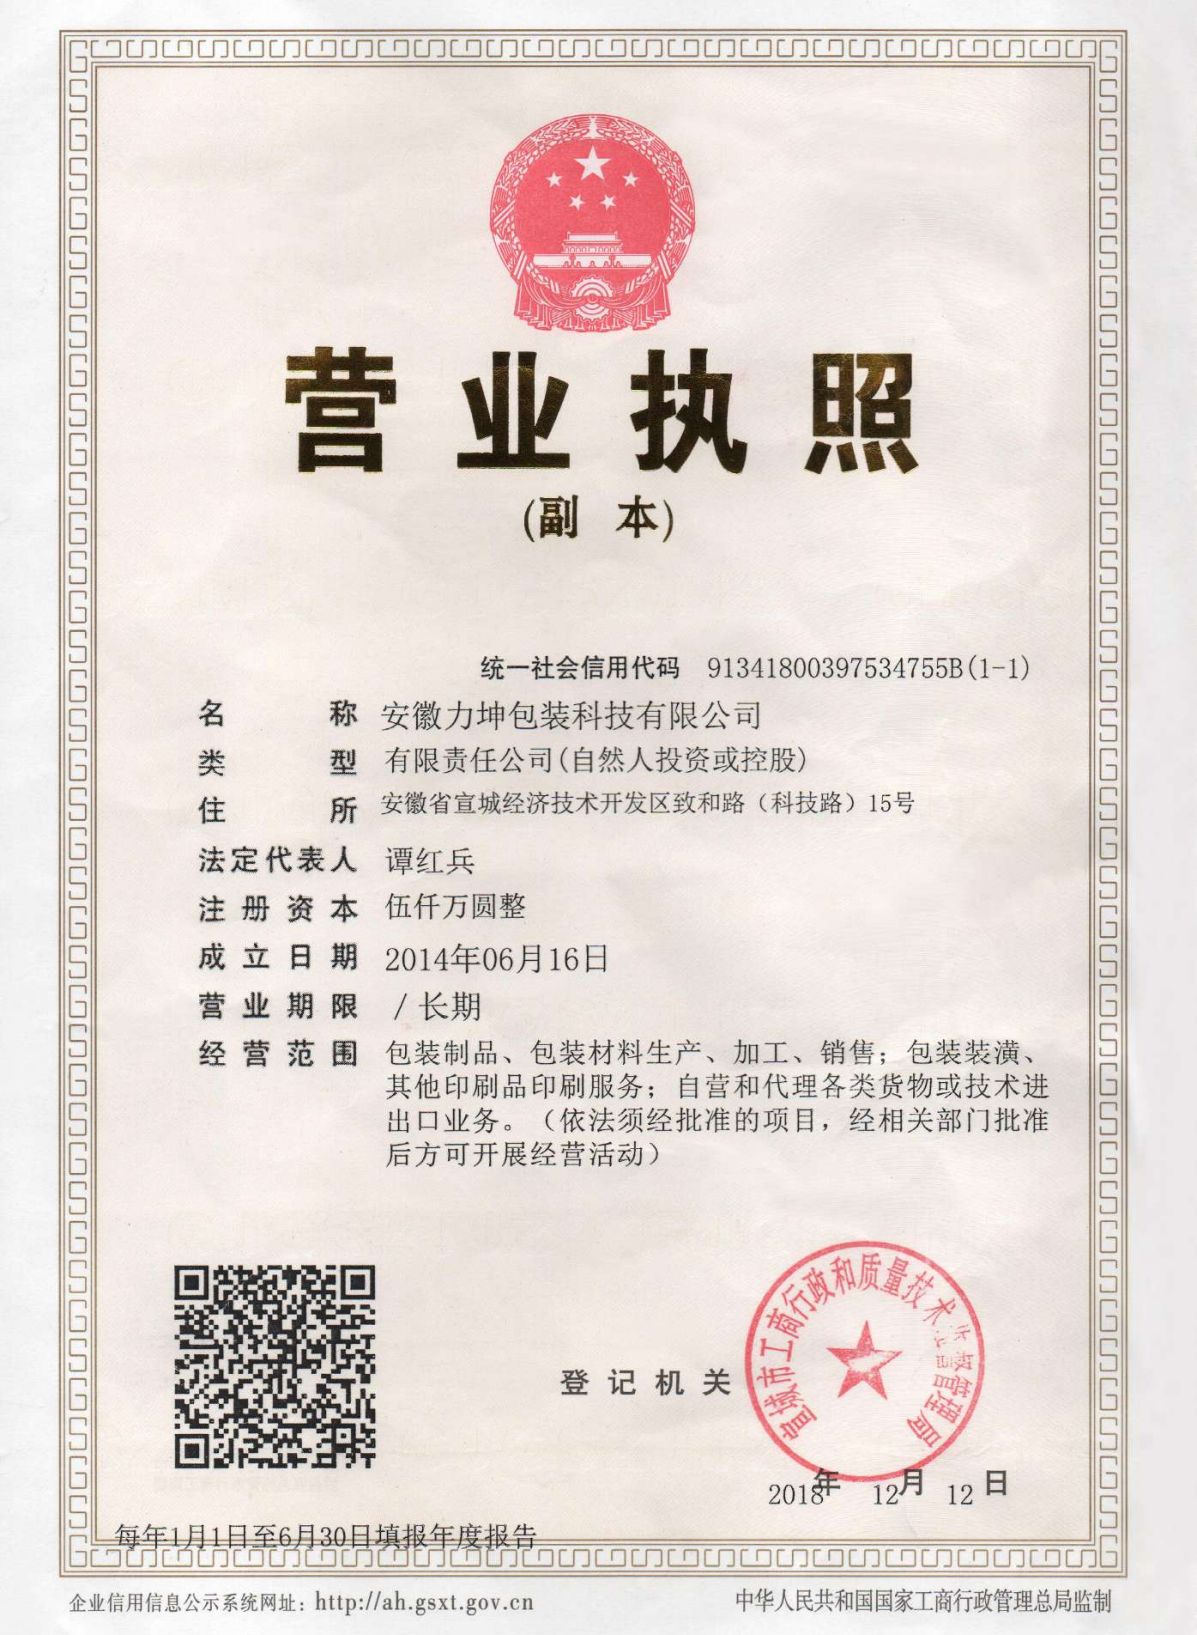 sertifikaat (2)